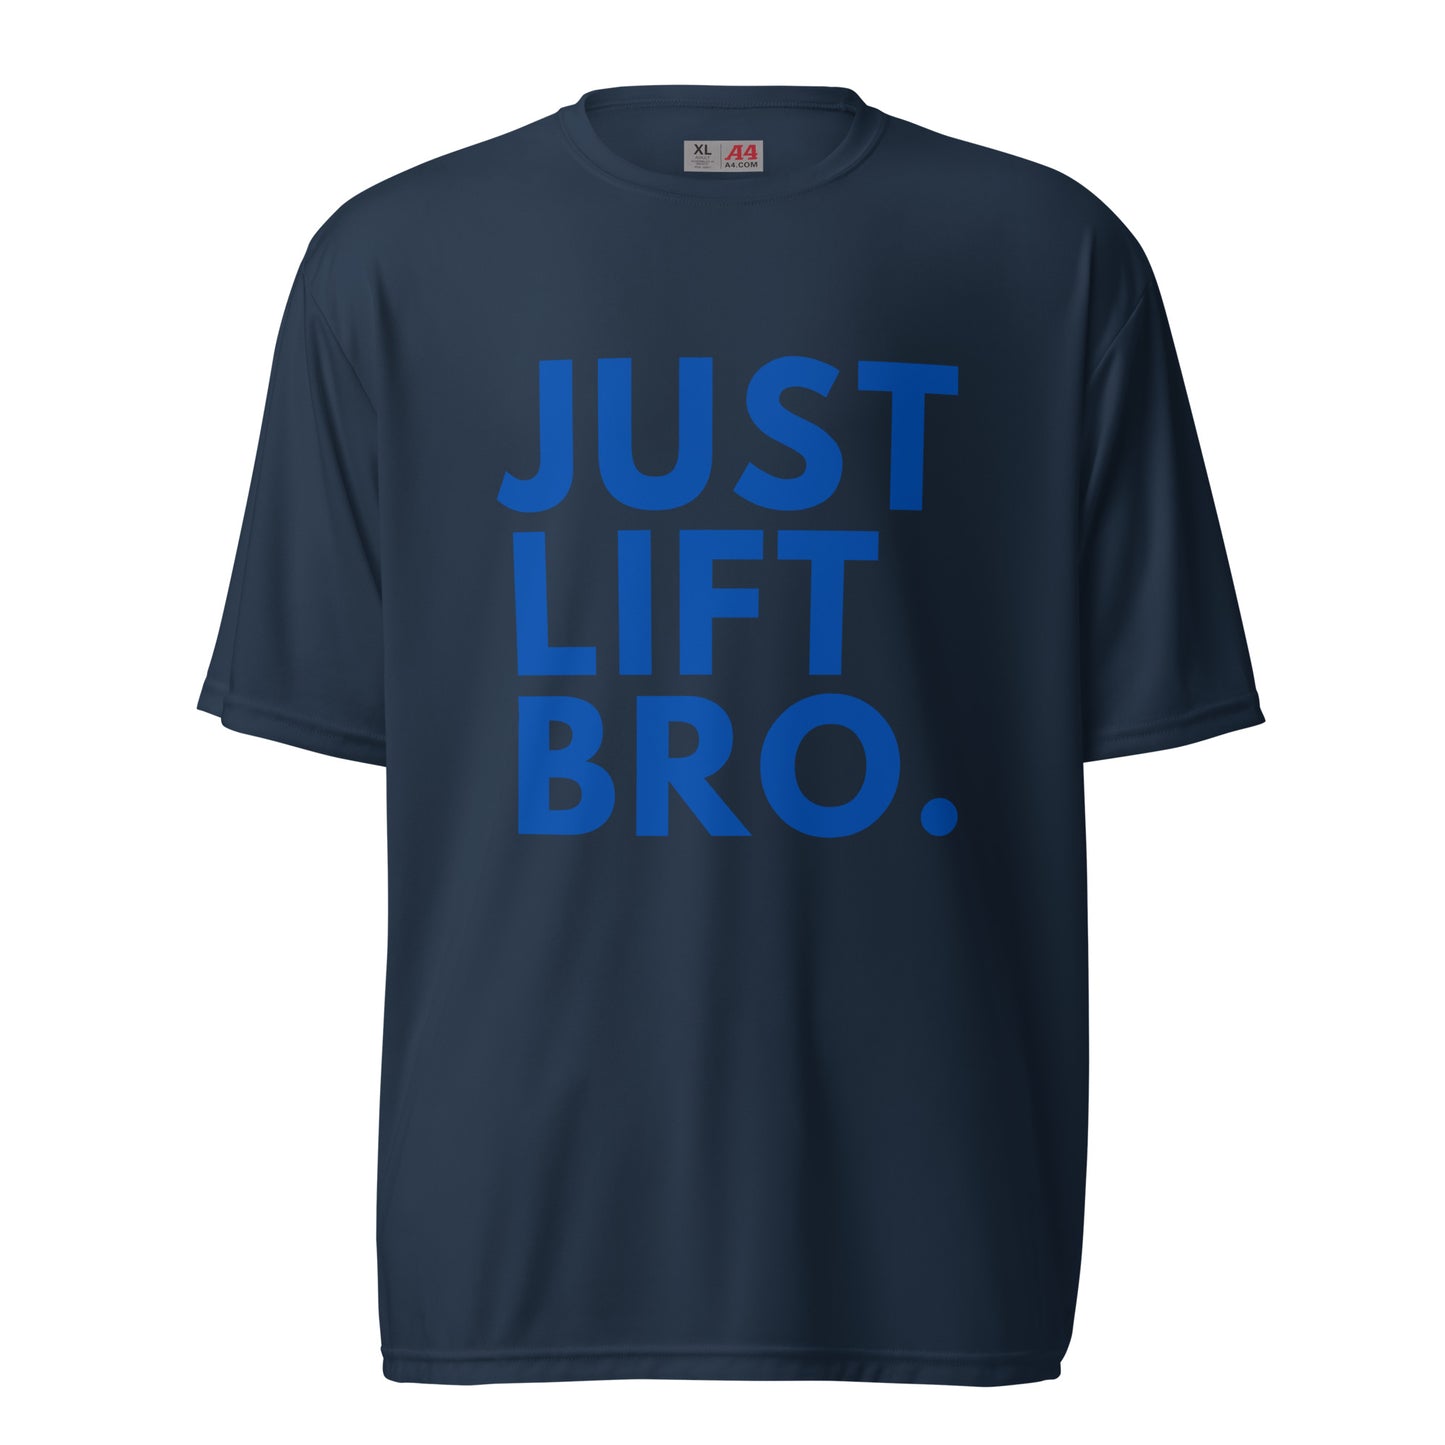 Just Lift Bro. Workout Shirt